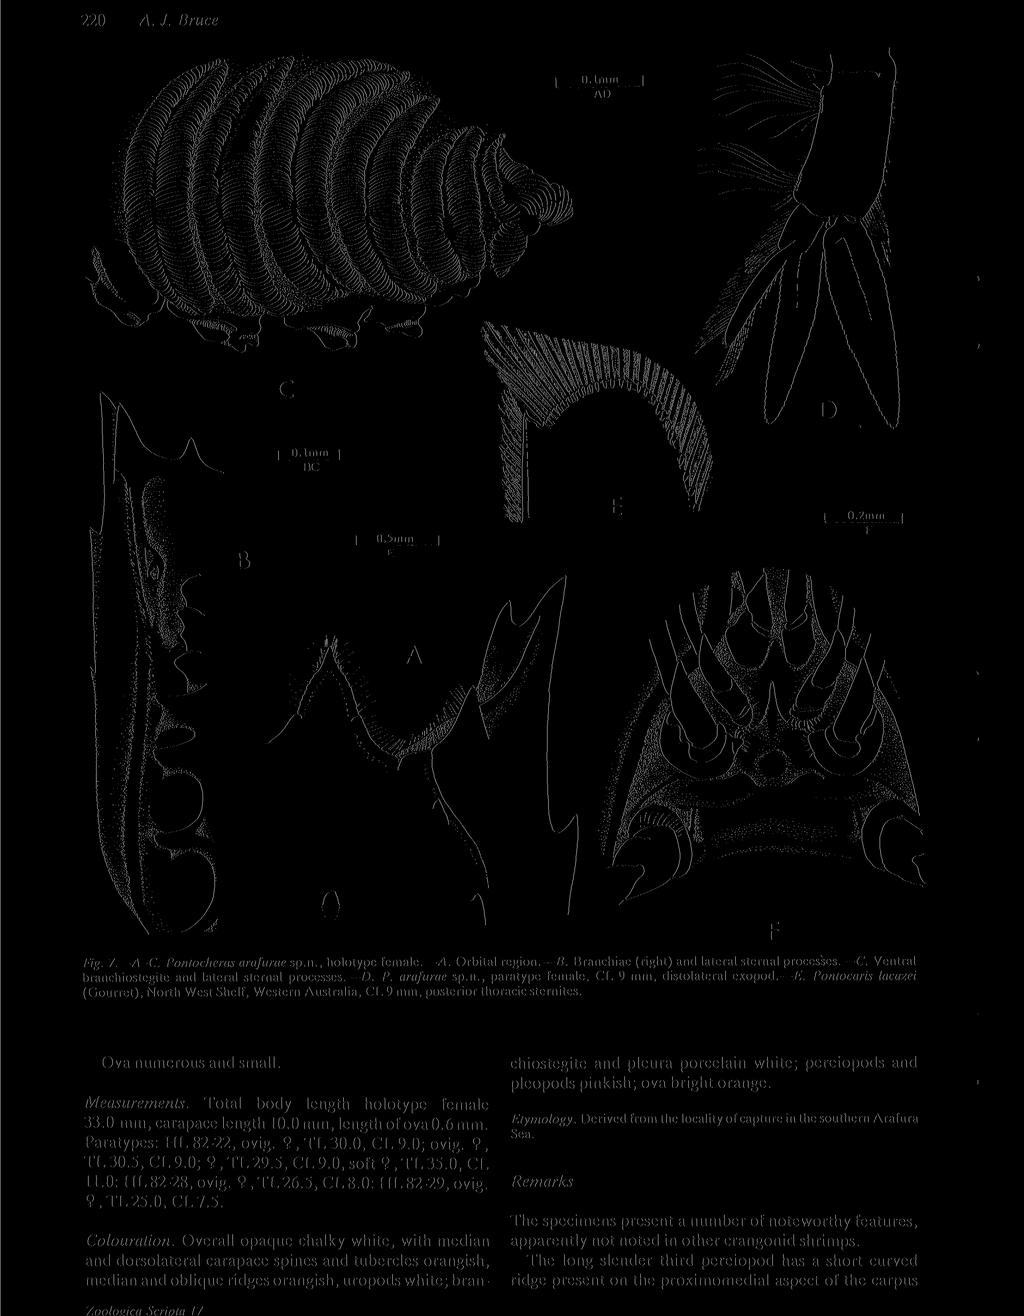 Zoologica Scripta 17 220 A. J. Bruce Fig. 7.-A-C. Pontocheras arafurae sp.n., holotype female. A. Orbital region. B. Branchiae (right) and lateral sternal processes. C.